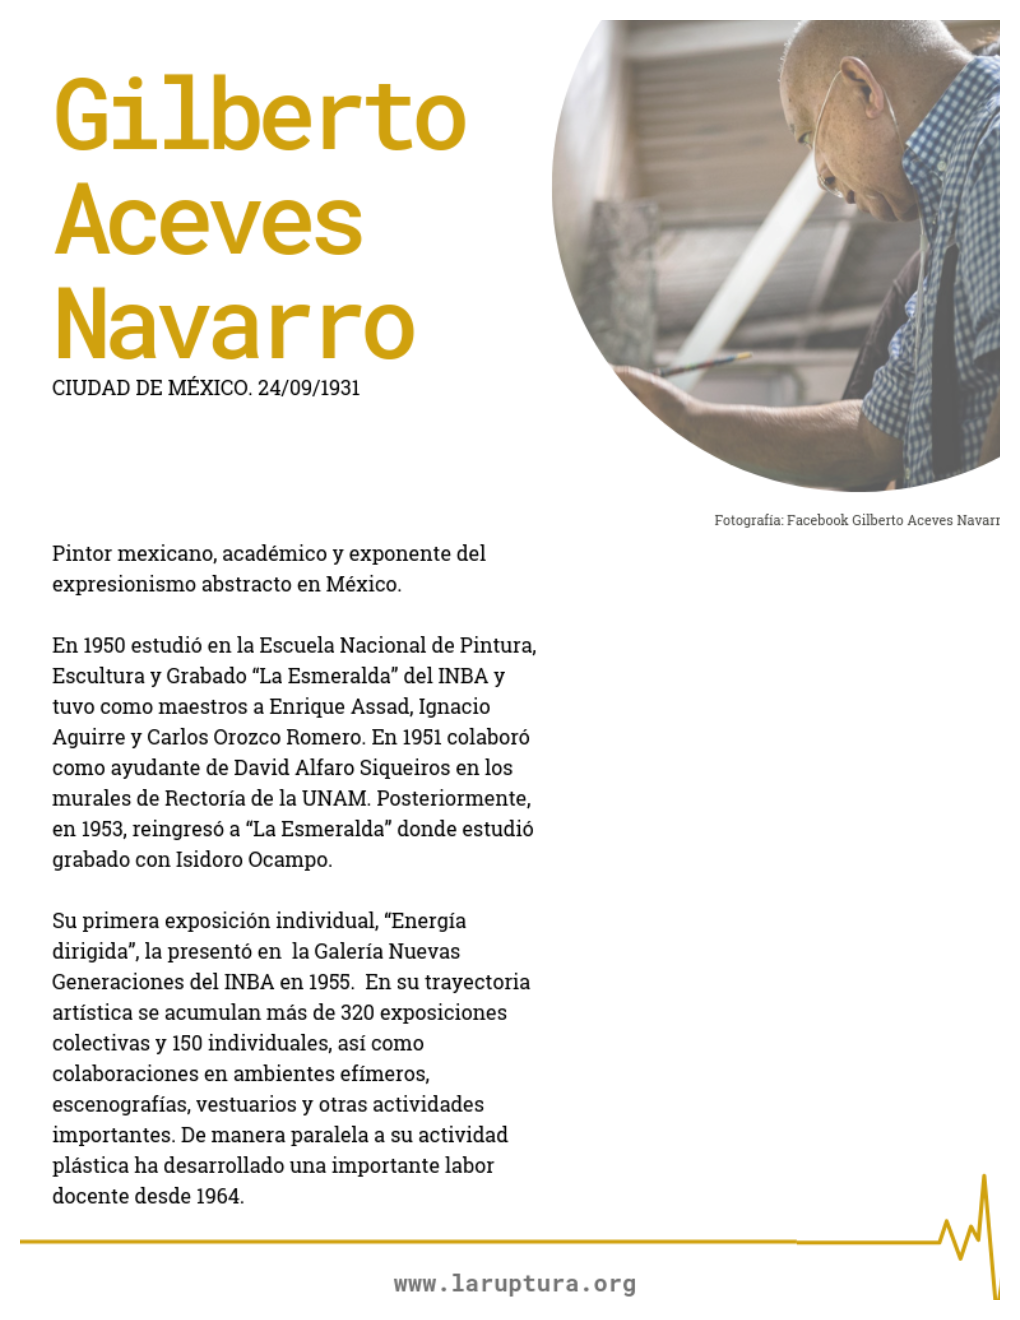 Gilberto Aceves Navarro 2019